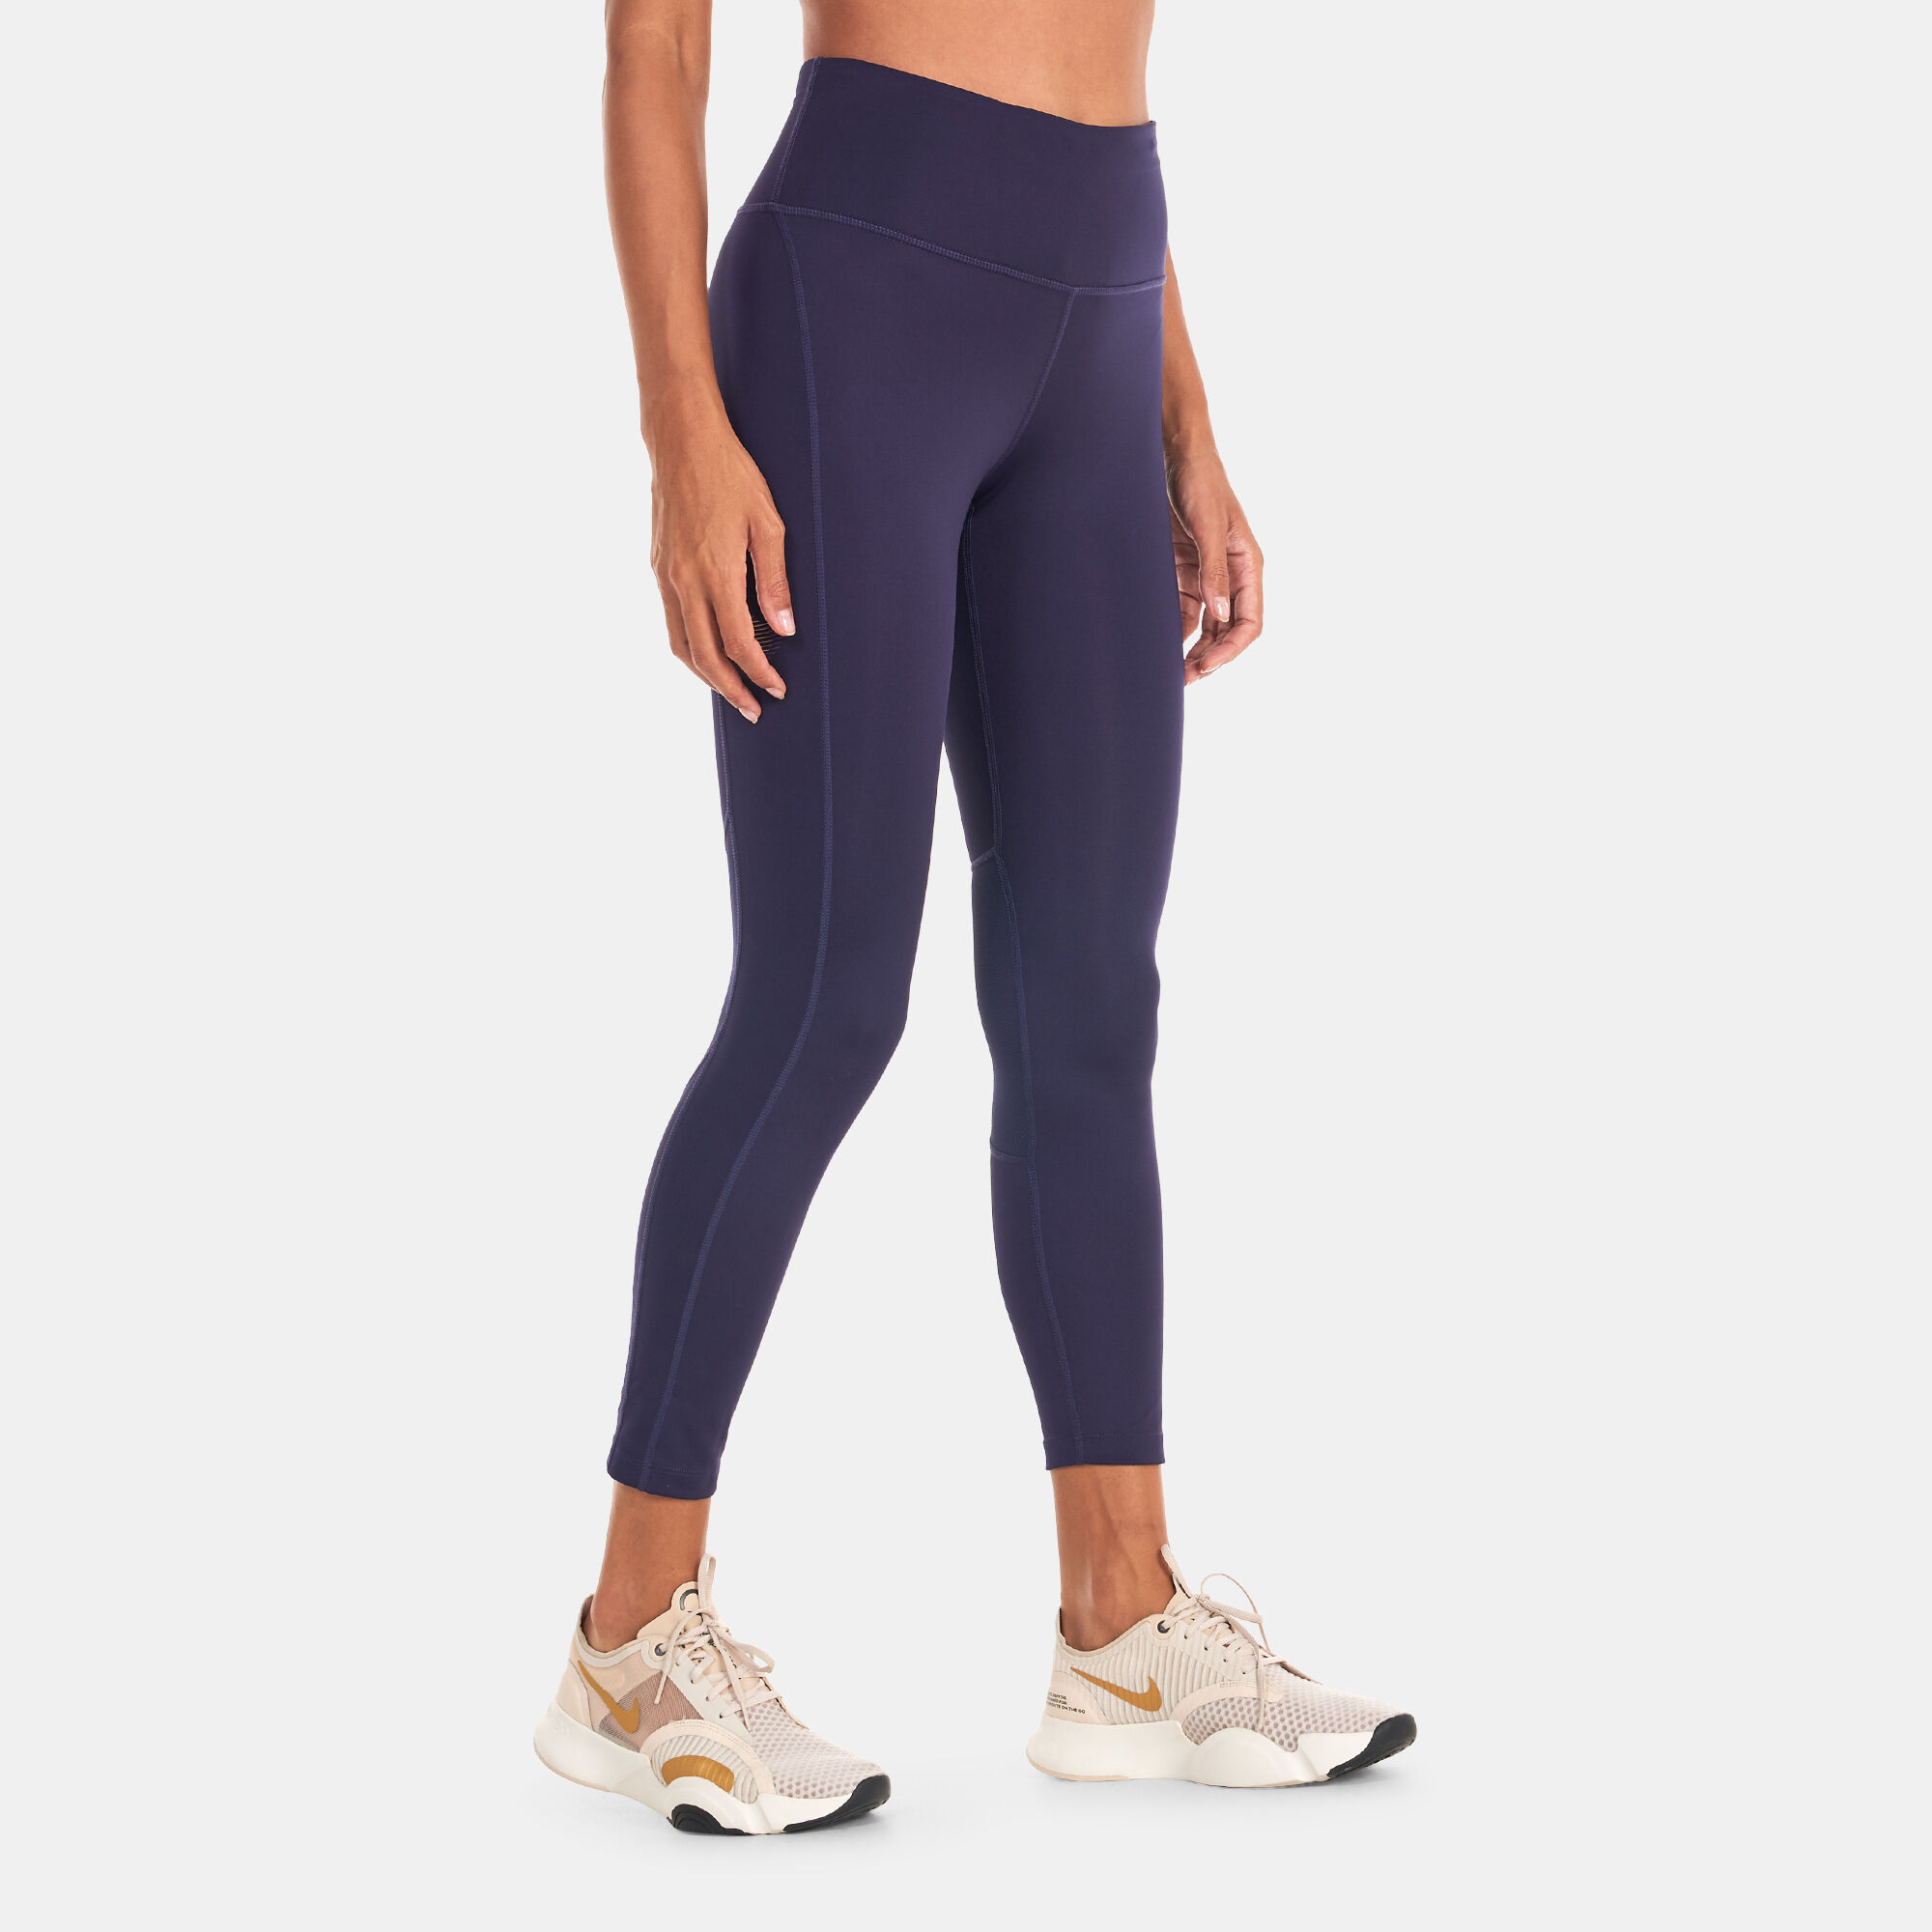 Nike Women's Pro Tight (Black/White, X-Small) : Amazon.in: Clothing &  Accessories